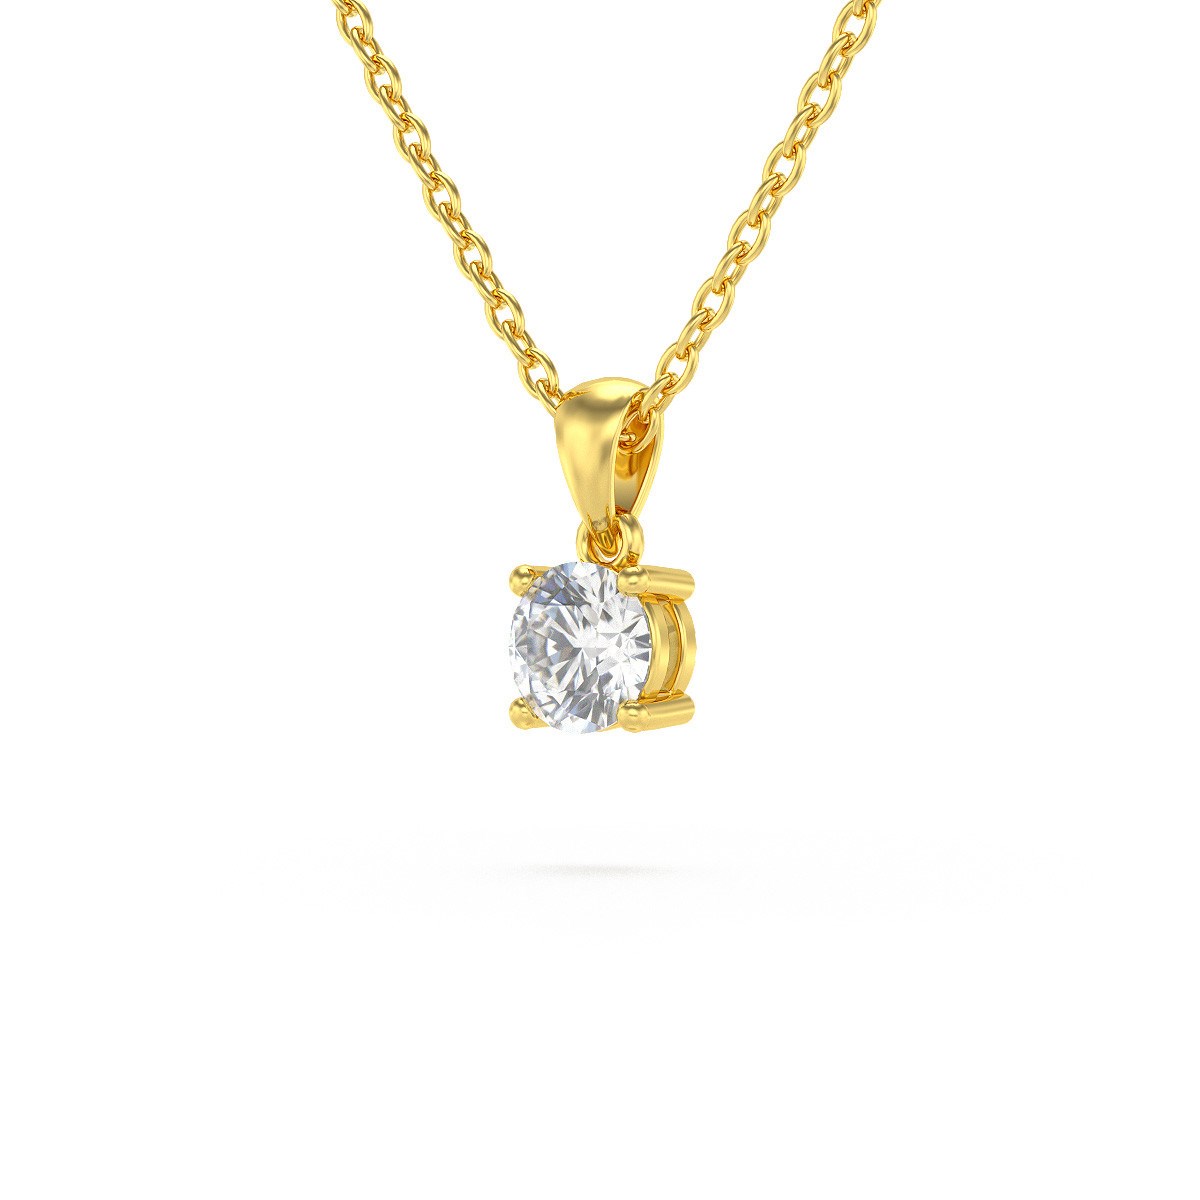 Collier Pendentif ADEN Or 585 Jaune Diamant Chaine Or 585 incluse 0.23grs - vue 3